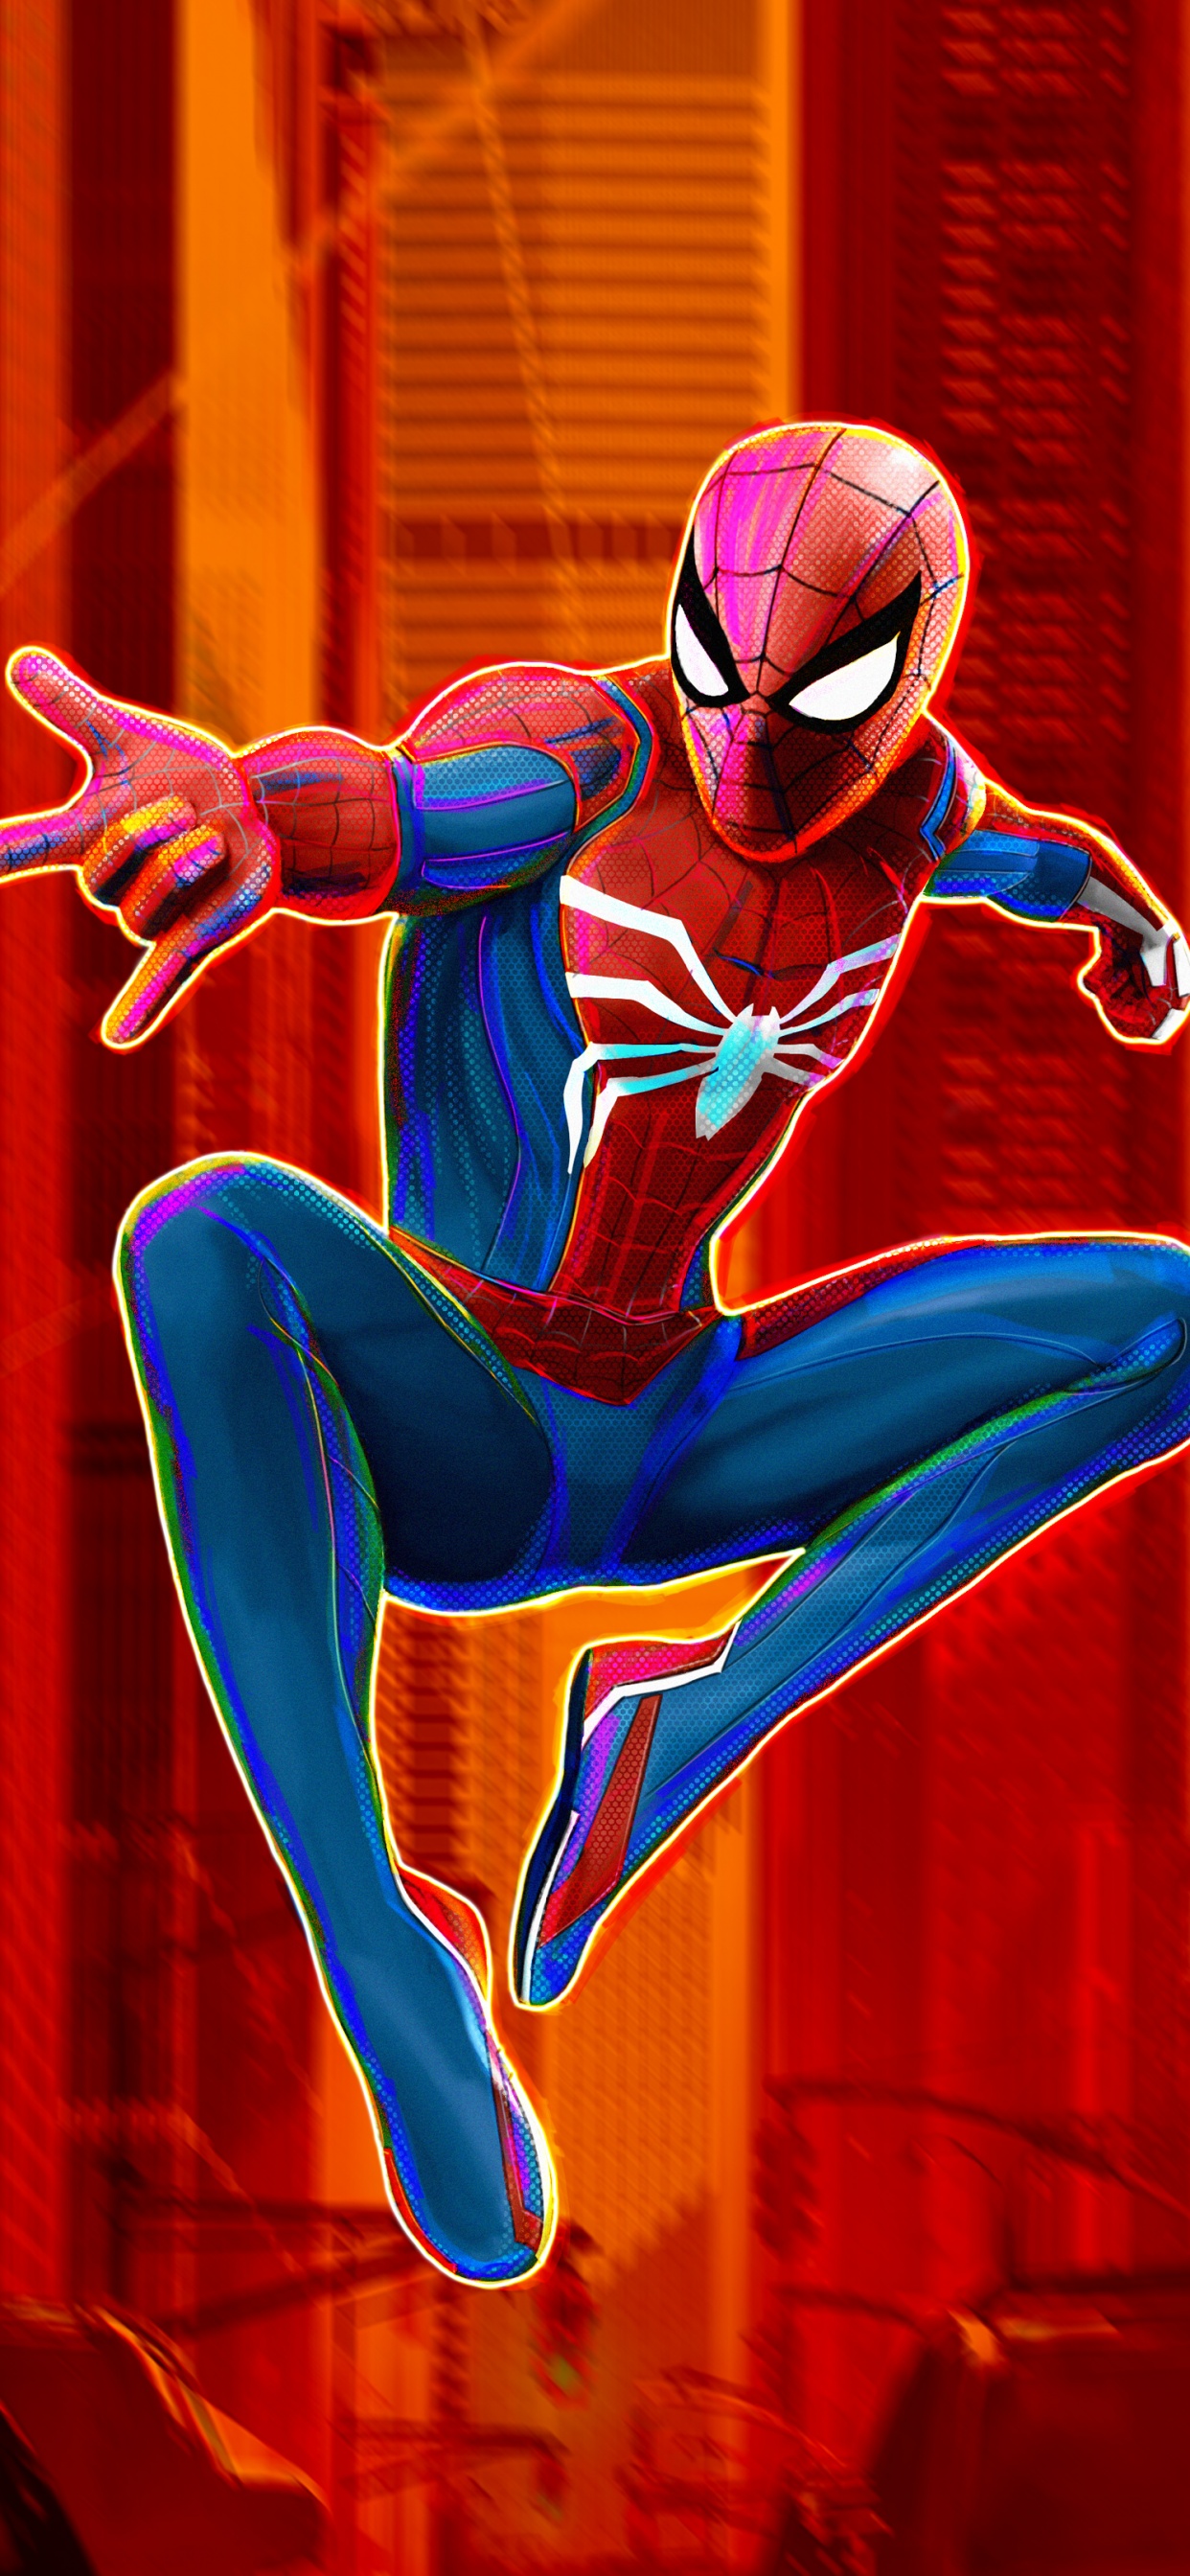 Spider-Man Mask Group Live Wallpaper - free download